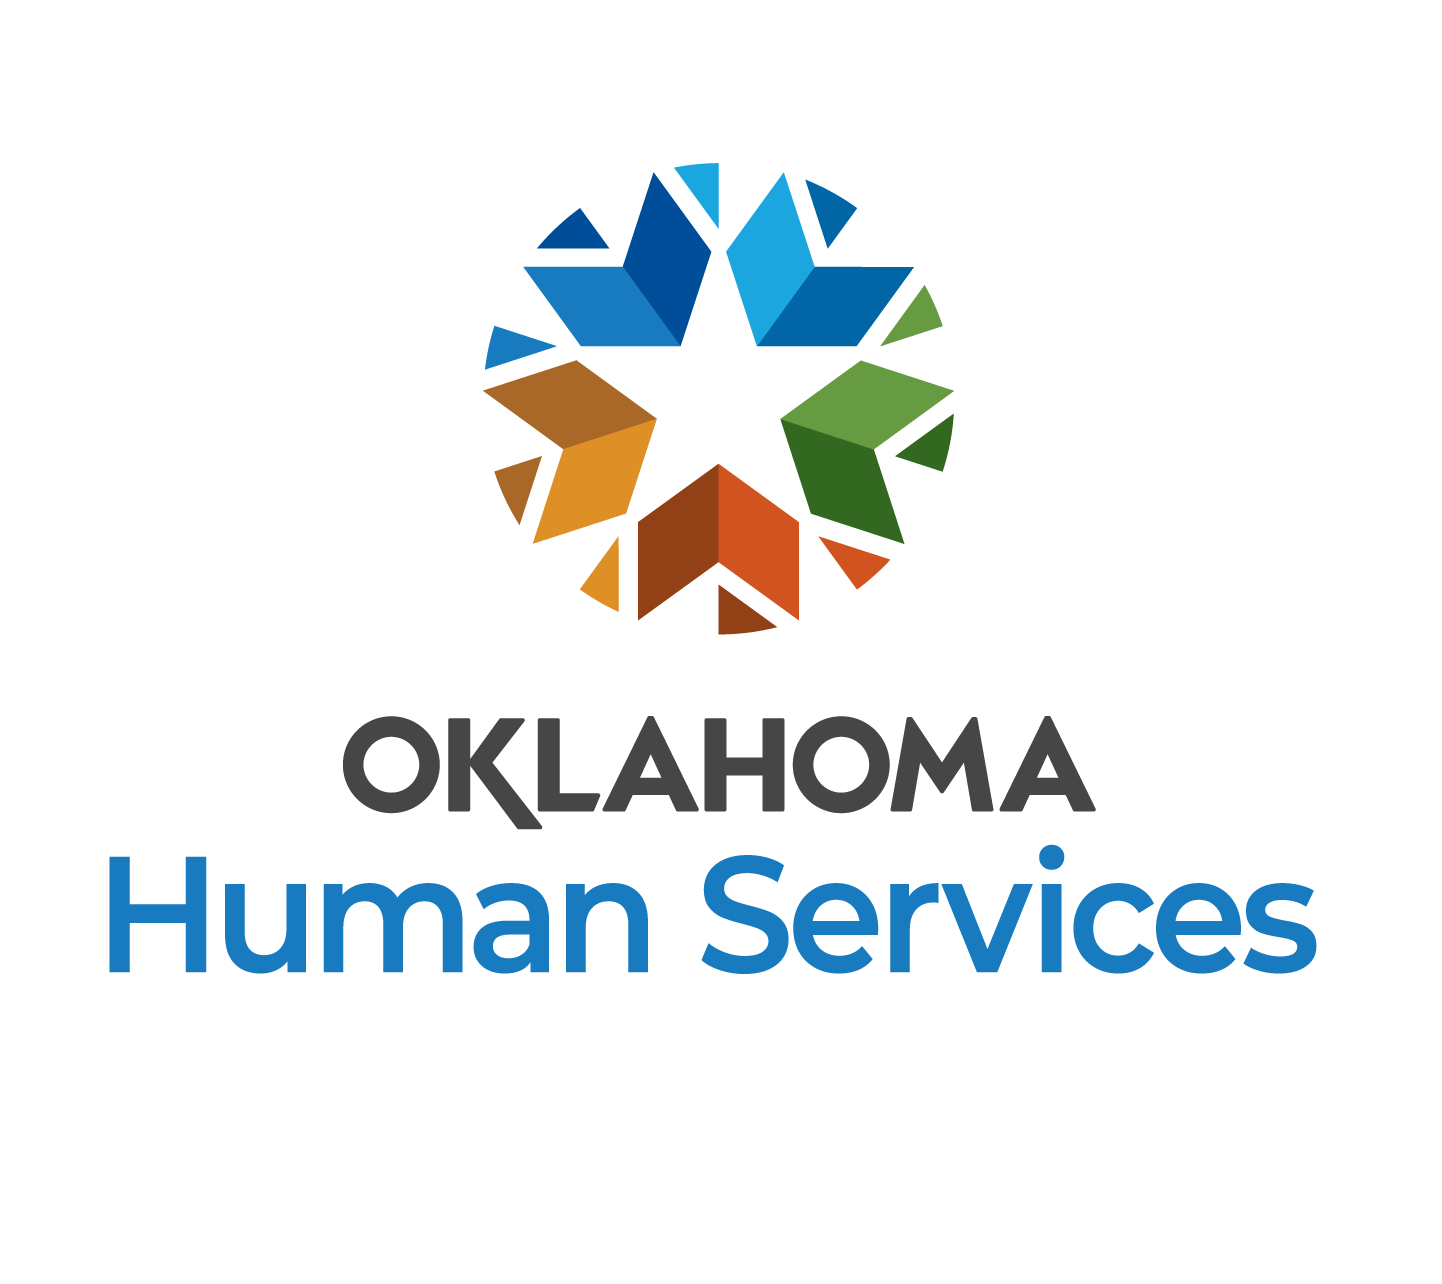 Oklahoma Department of Human Services company logo